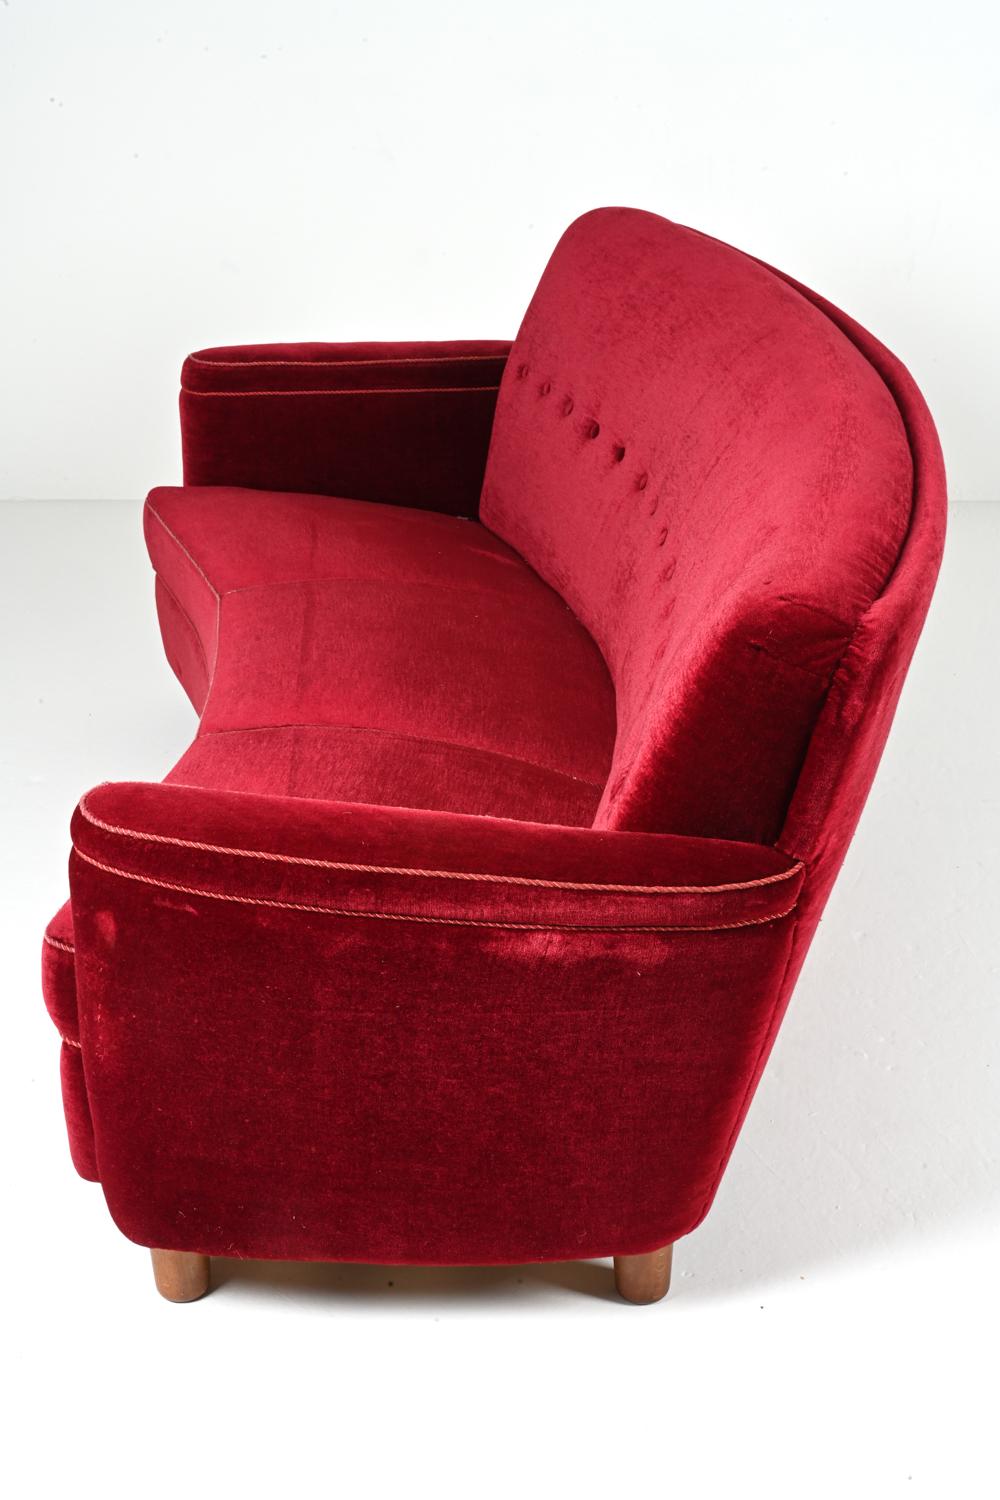 Manner of Flemming Lassen Danish Mid-Century Sofa, c. 1940's For Sale 4